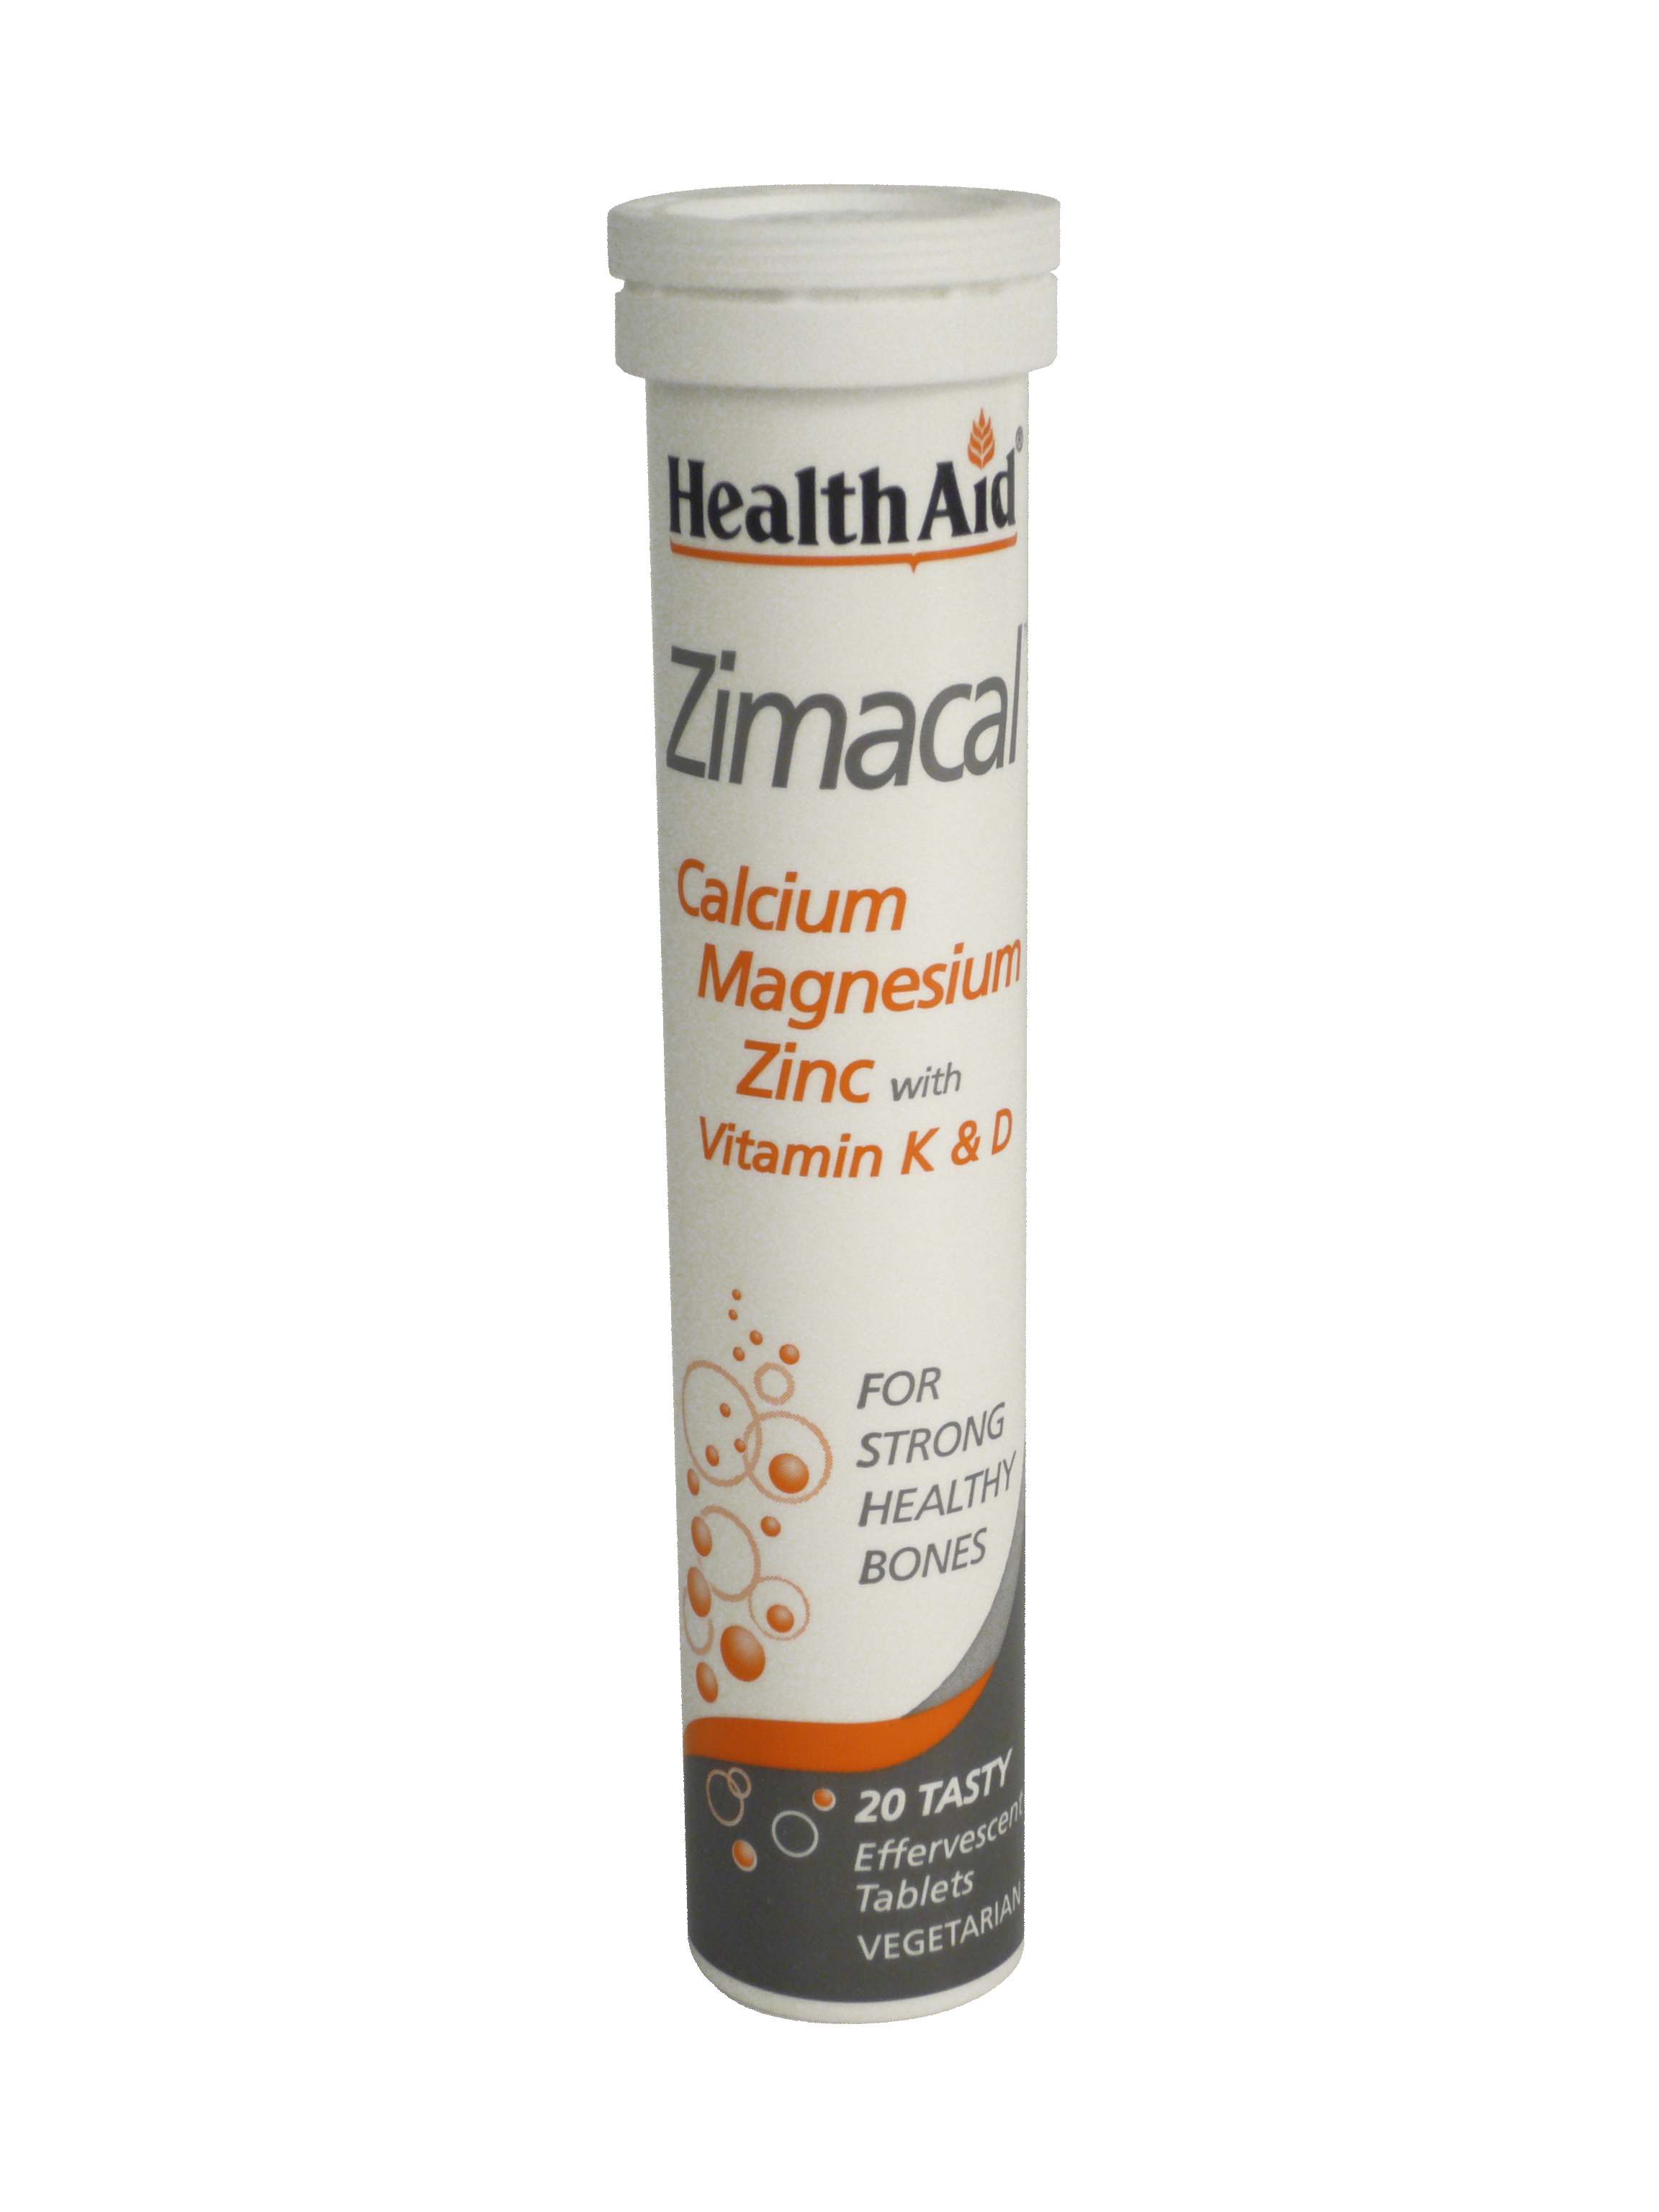 Health Aid Zimacal 20effervent tabs